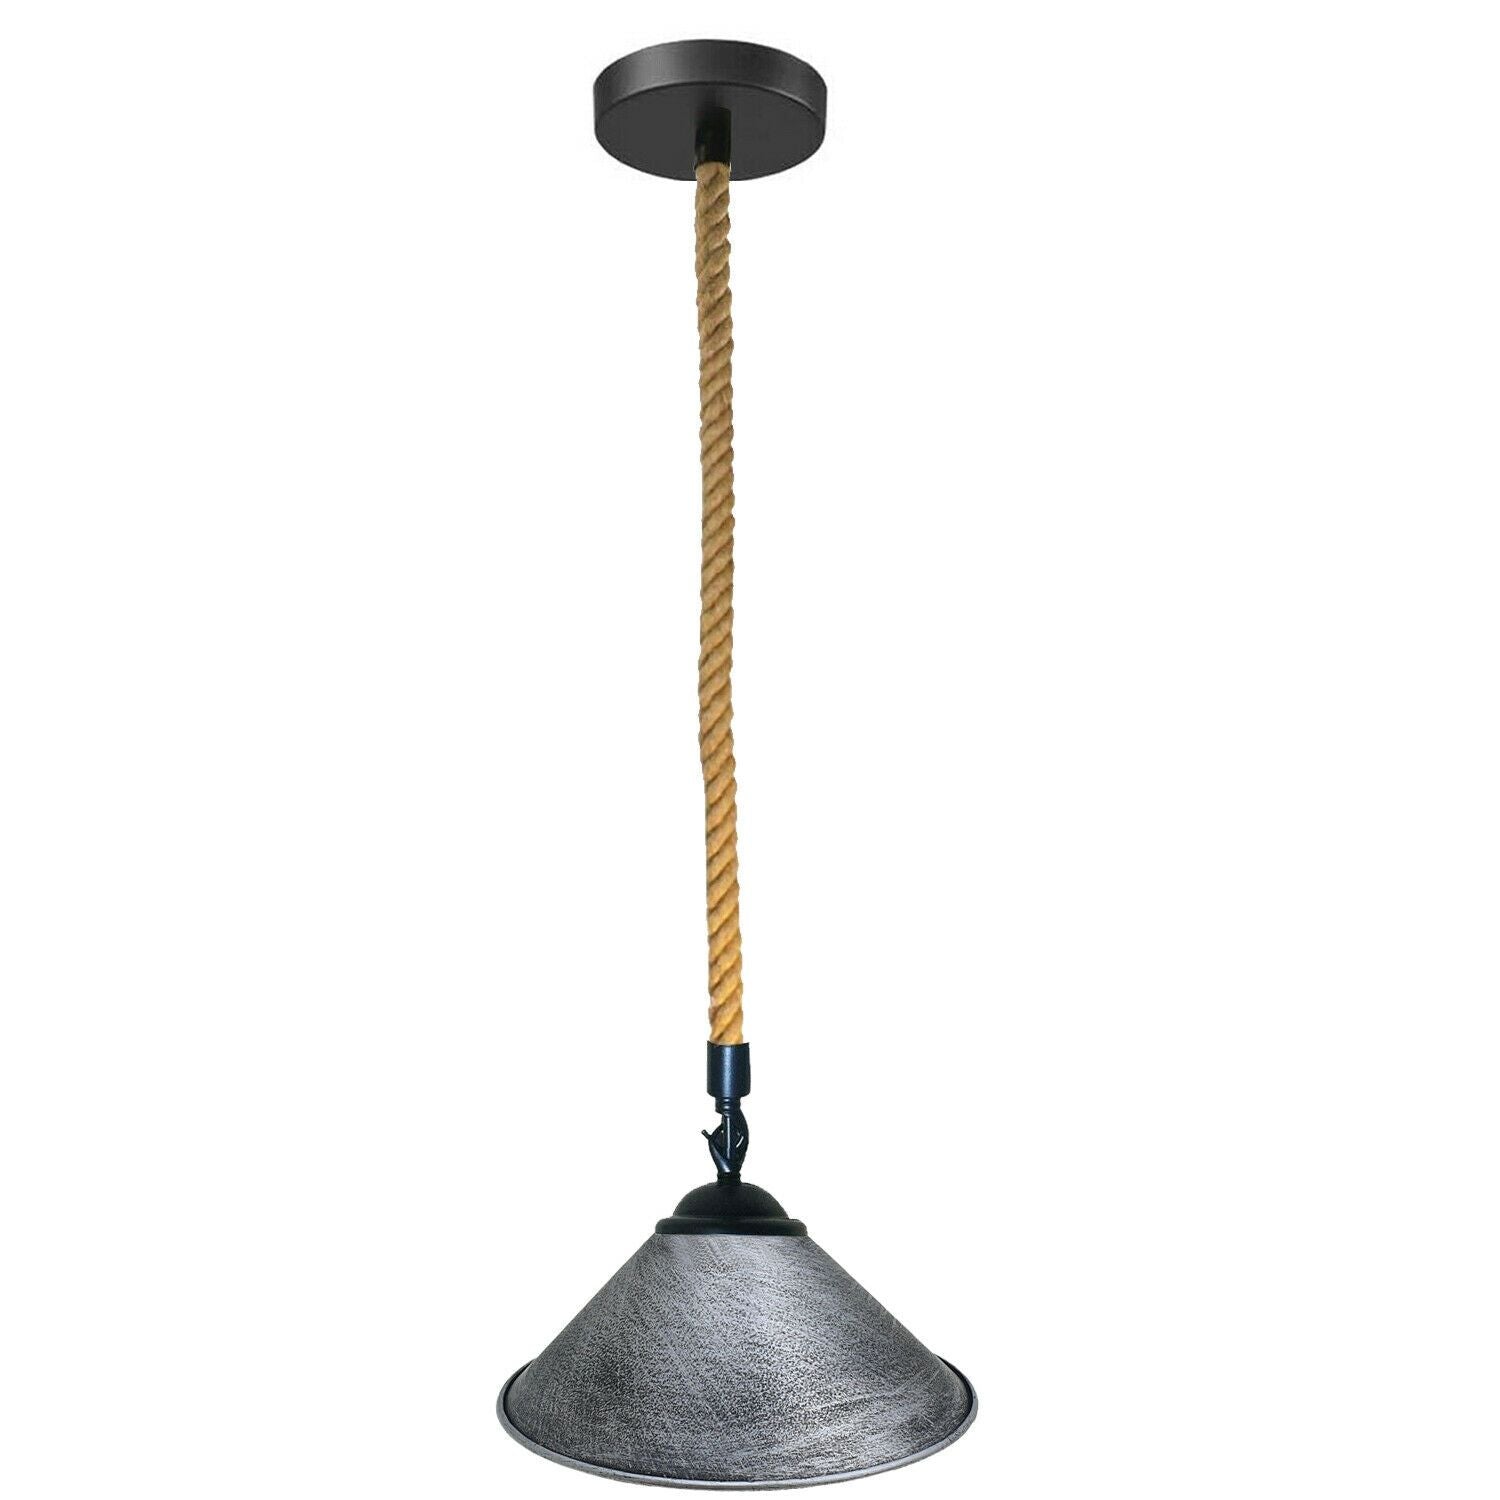 Brushed Silver Industrial Hemp Rope Cone Shade Lighting Pendants